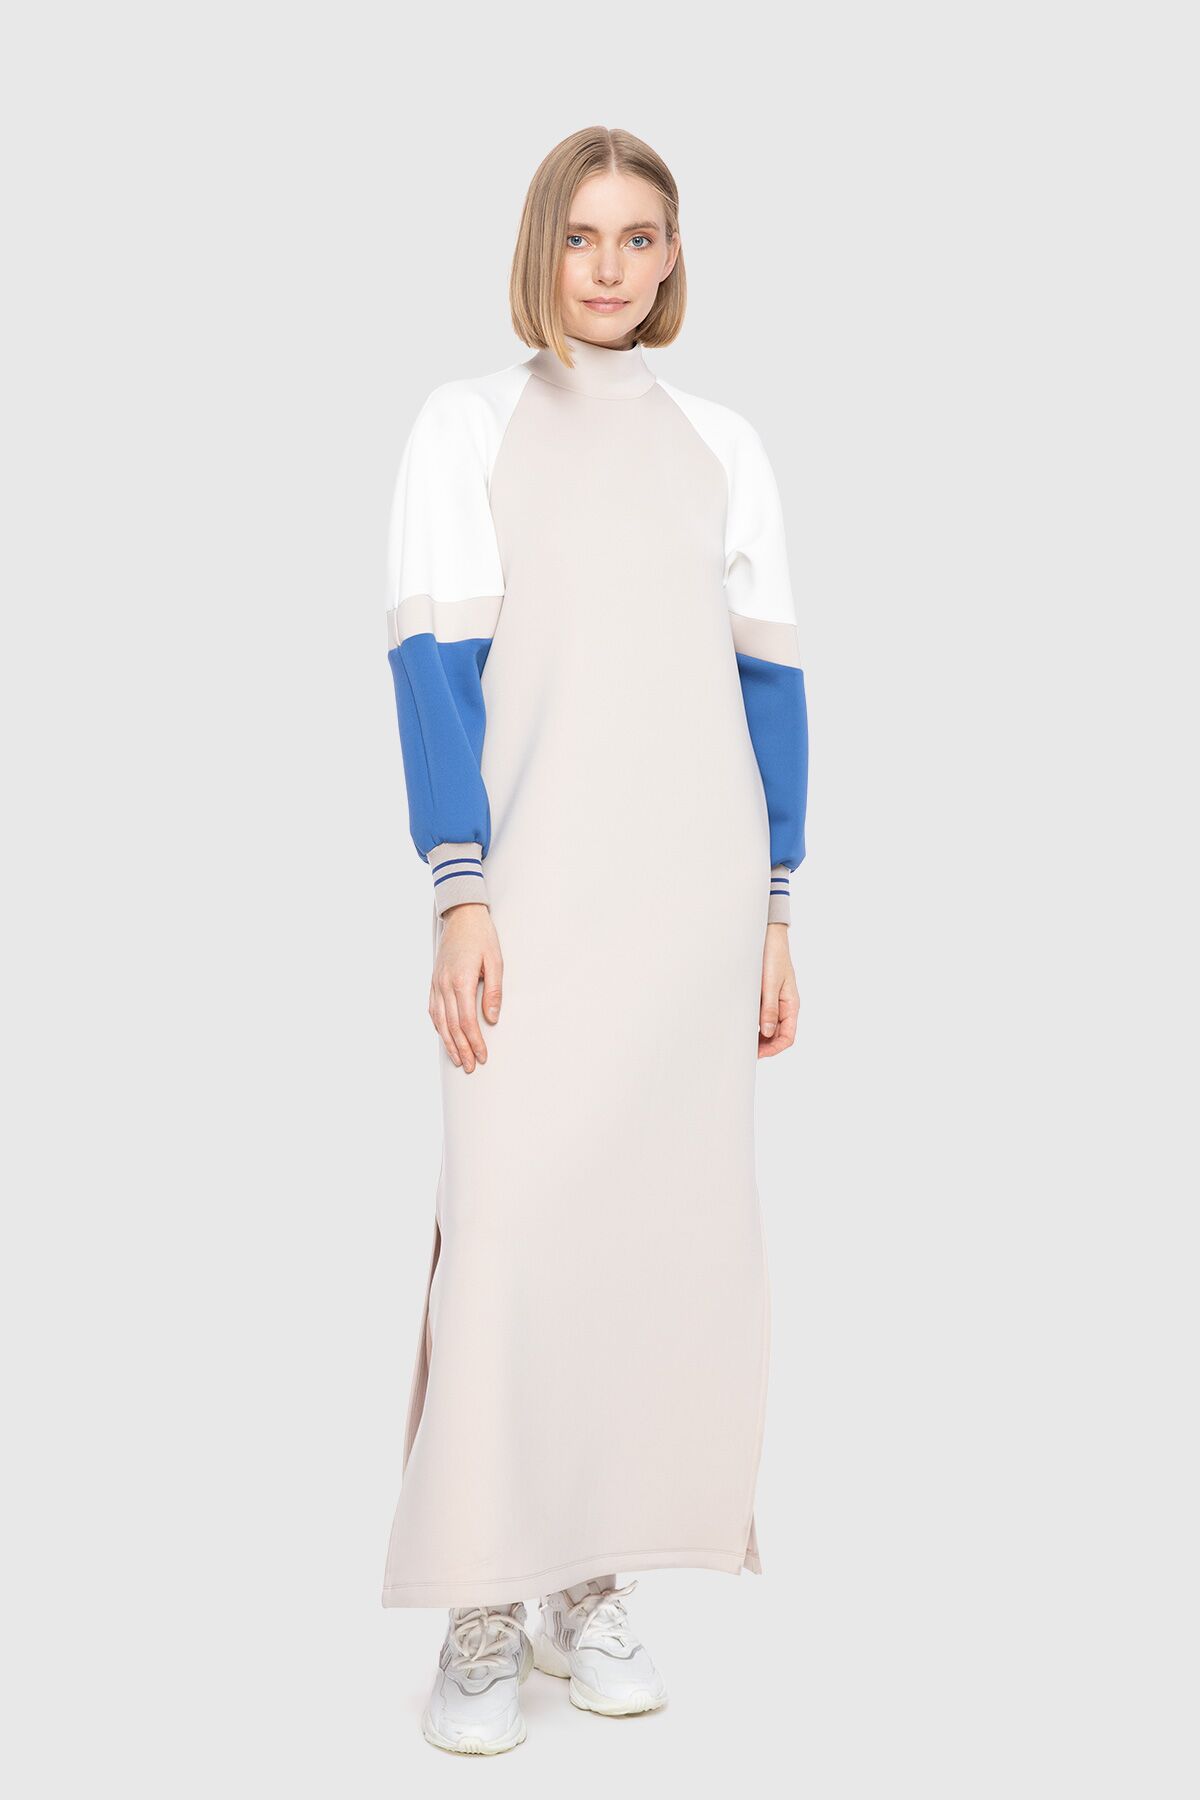 GIZIA SPORT - Embroidery Detailed Contrast Garnish Long Beige Dress